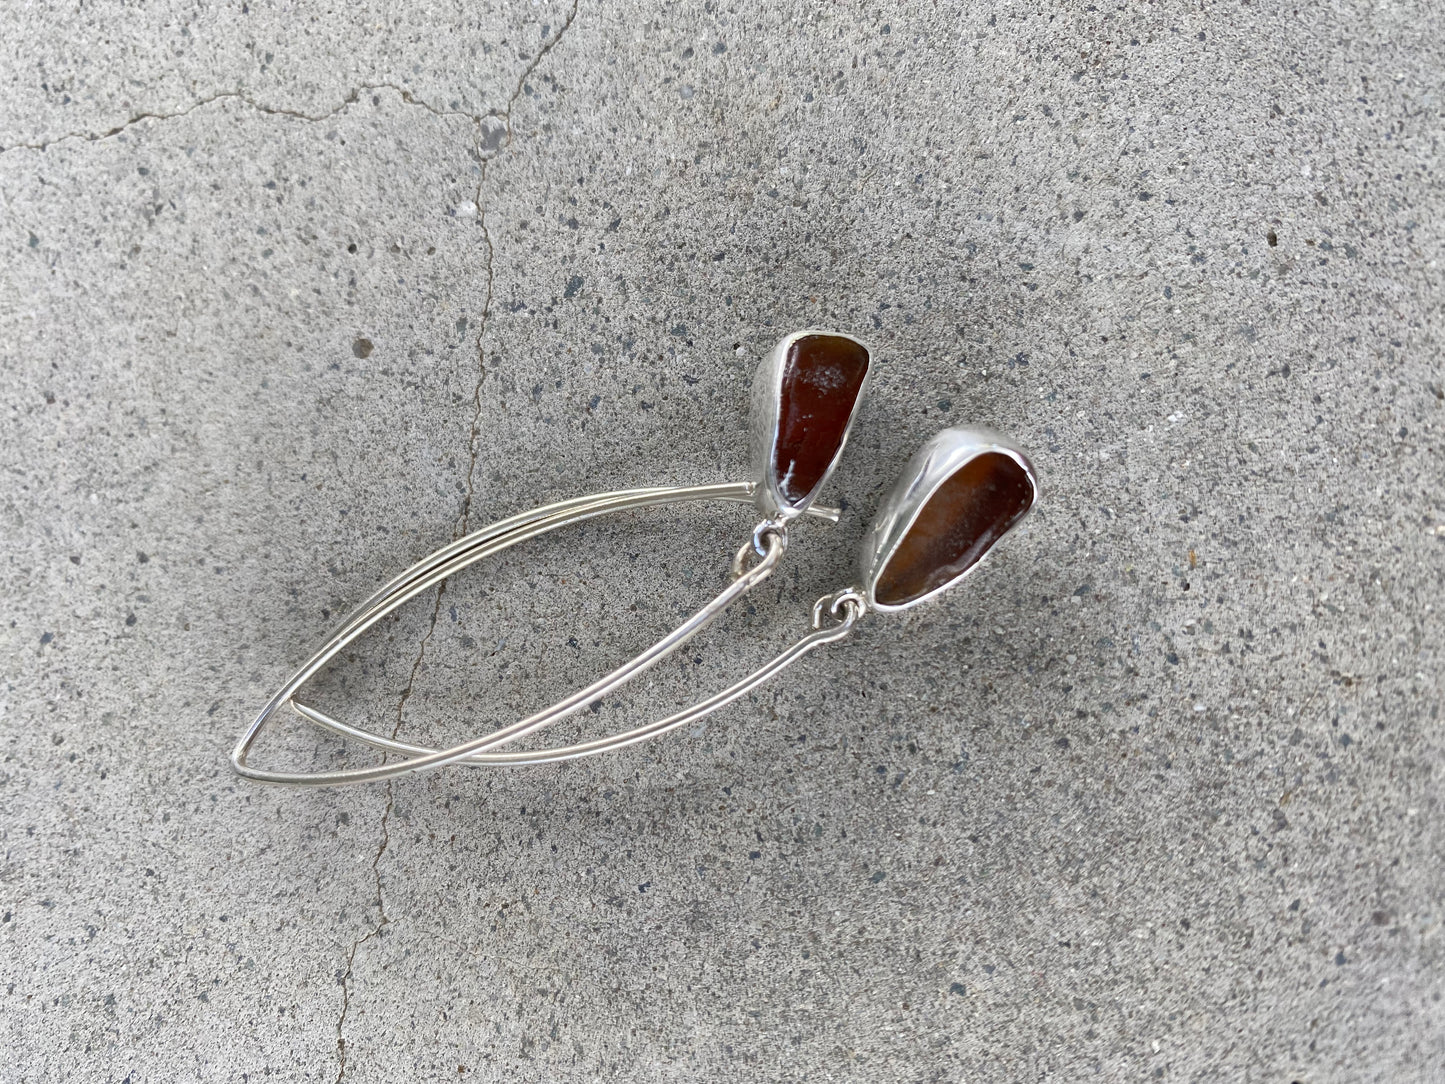 Great Ocean Road Seaglass Earrings